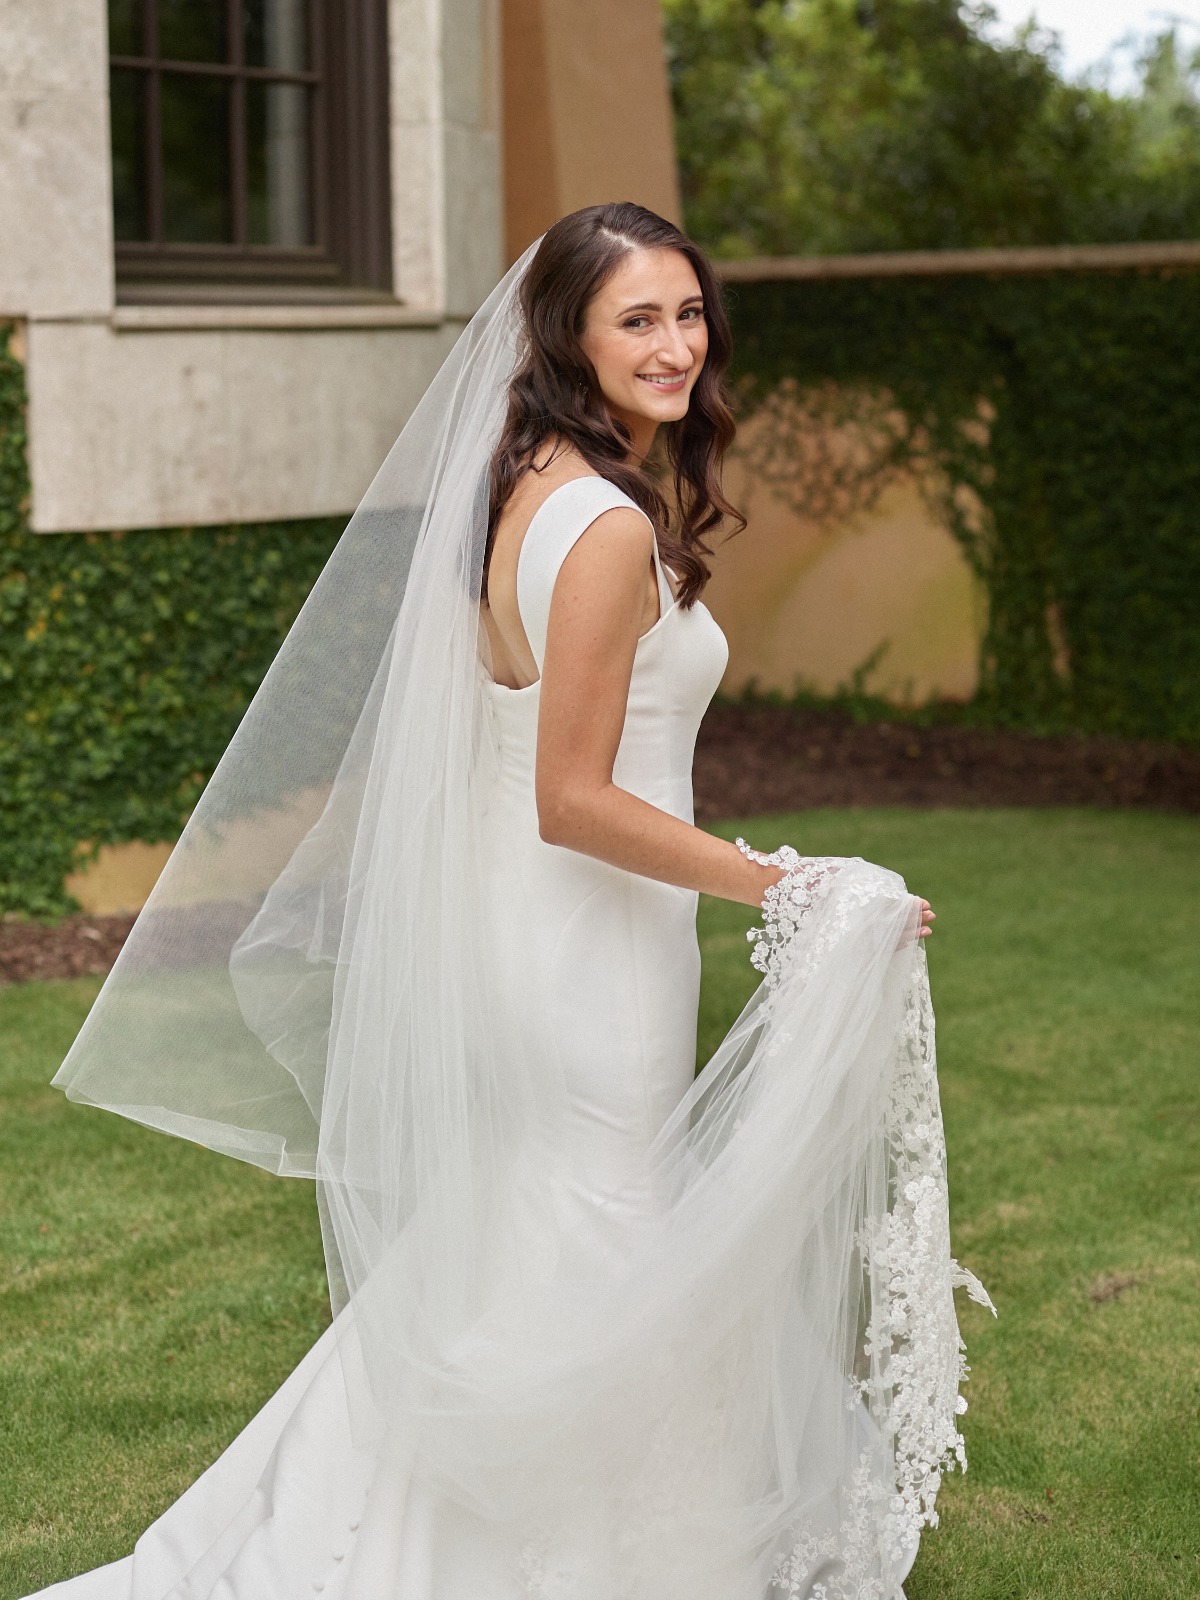 Portrait of bride holding veil walking on lawn